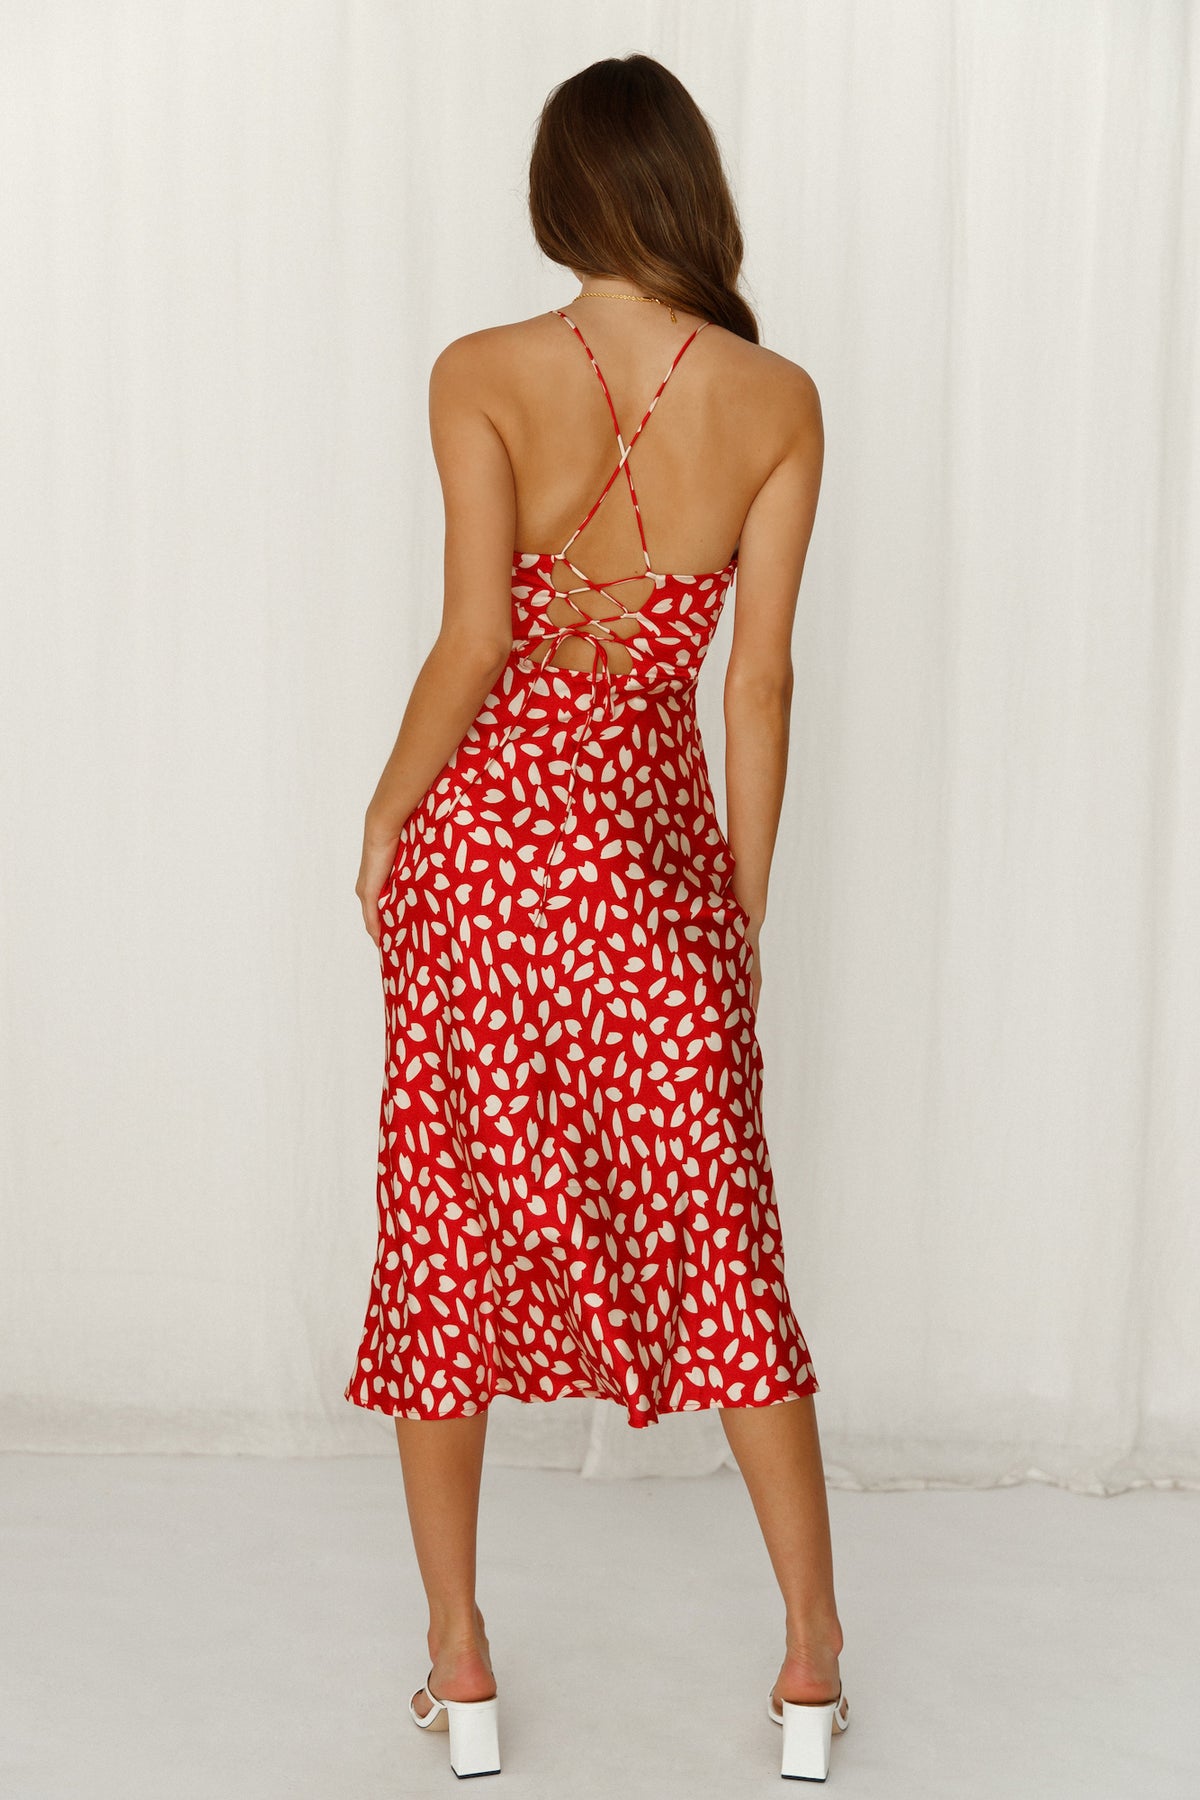 Shop Formal Dress - Happy Honeymoon Midi Dress Red fifth image